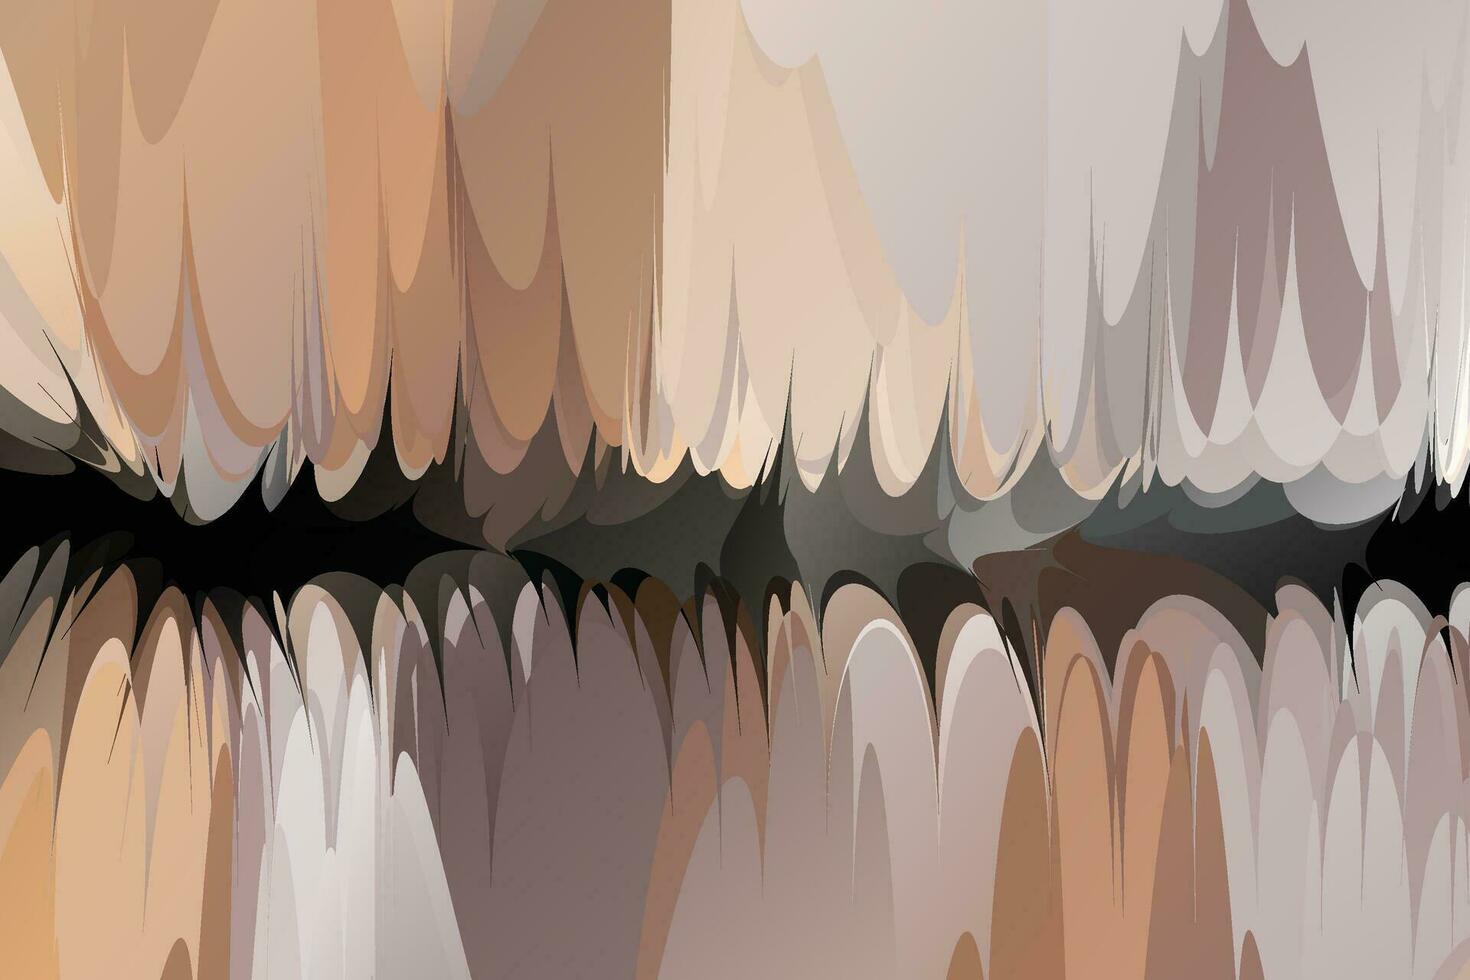 abstract leger bruin woestijn zand storm veld- strepen camouflage patroon leger achtergrond. pastel neutrale geschilderd achtergronden vector